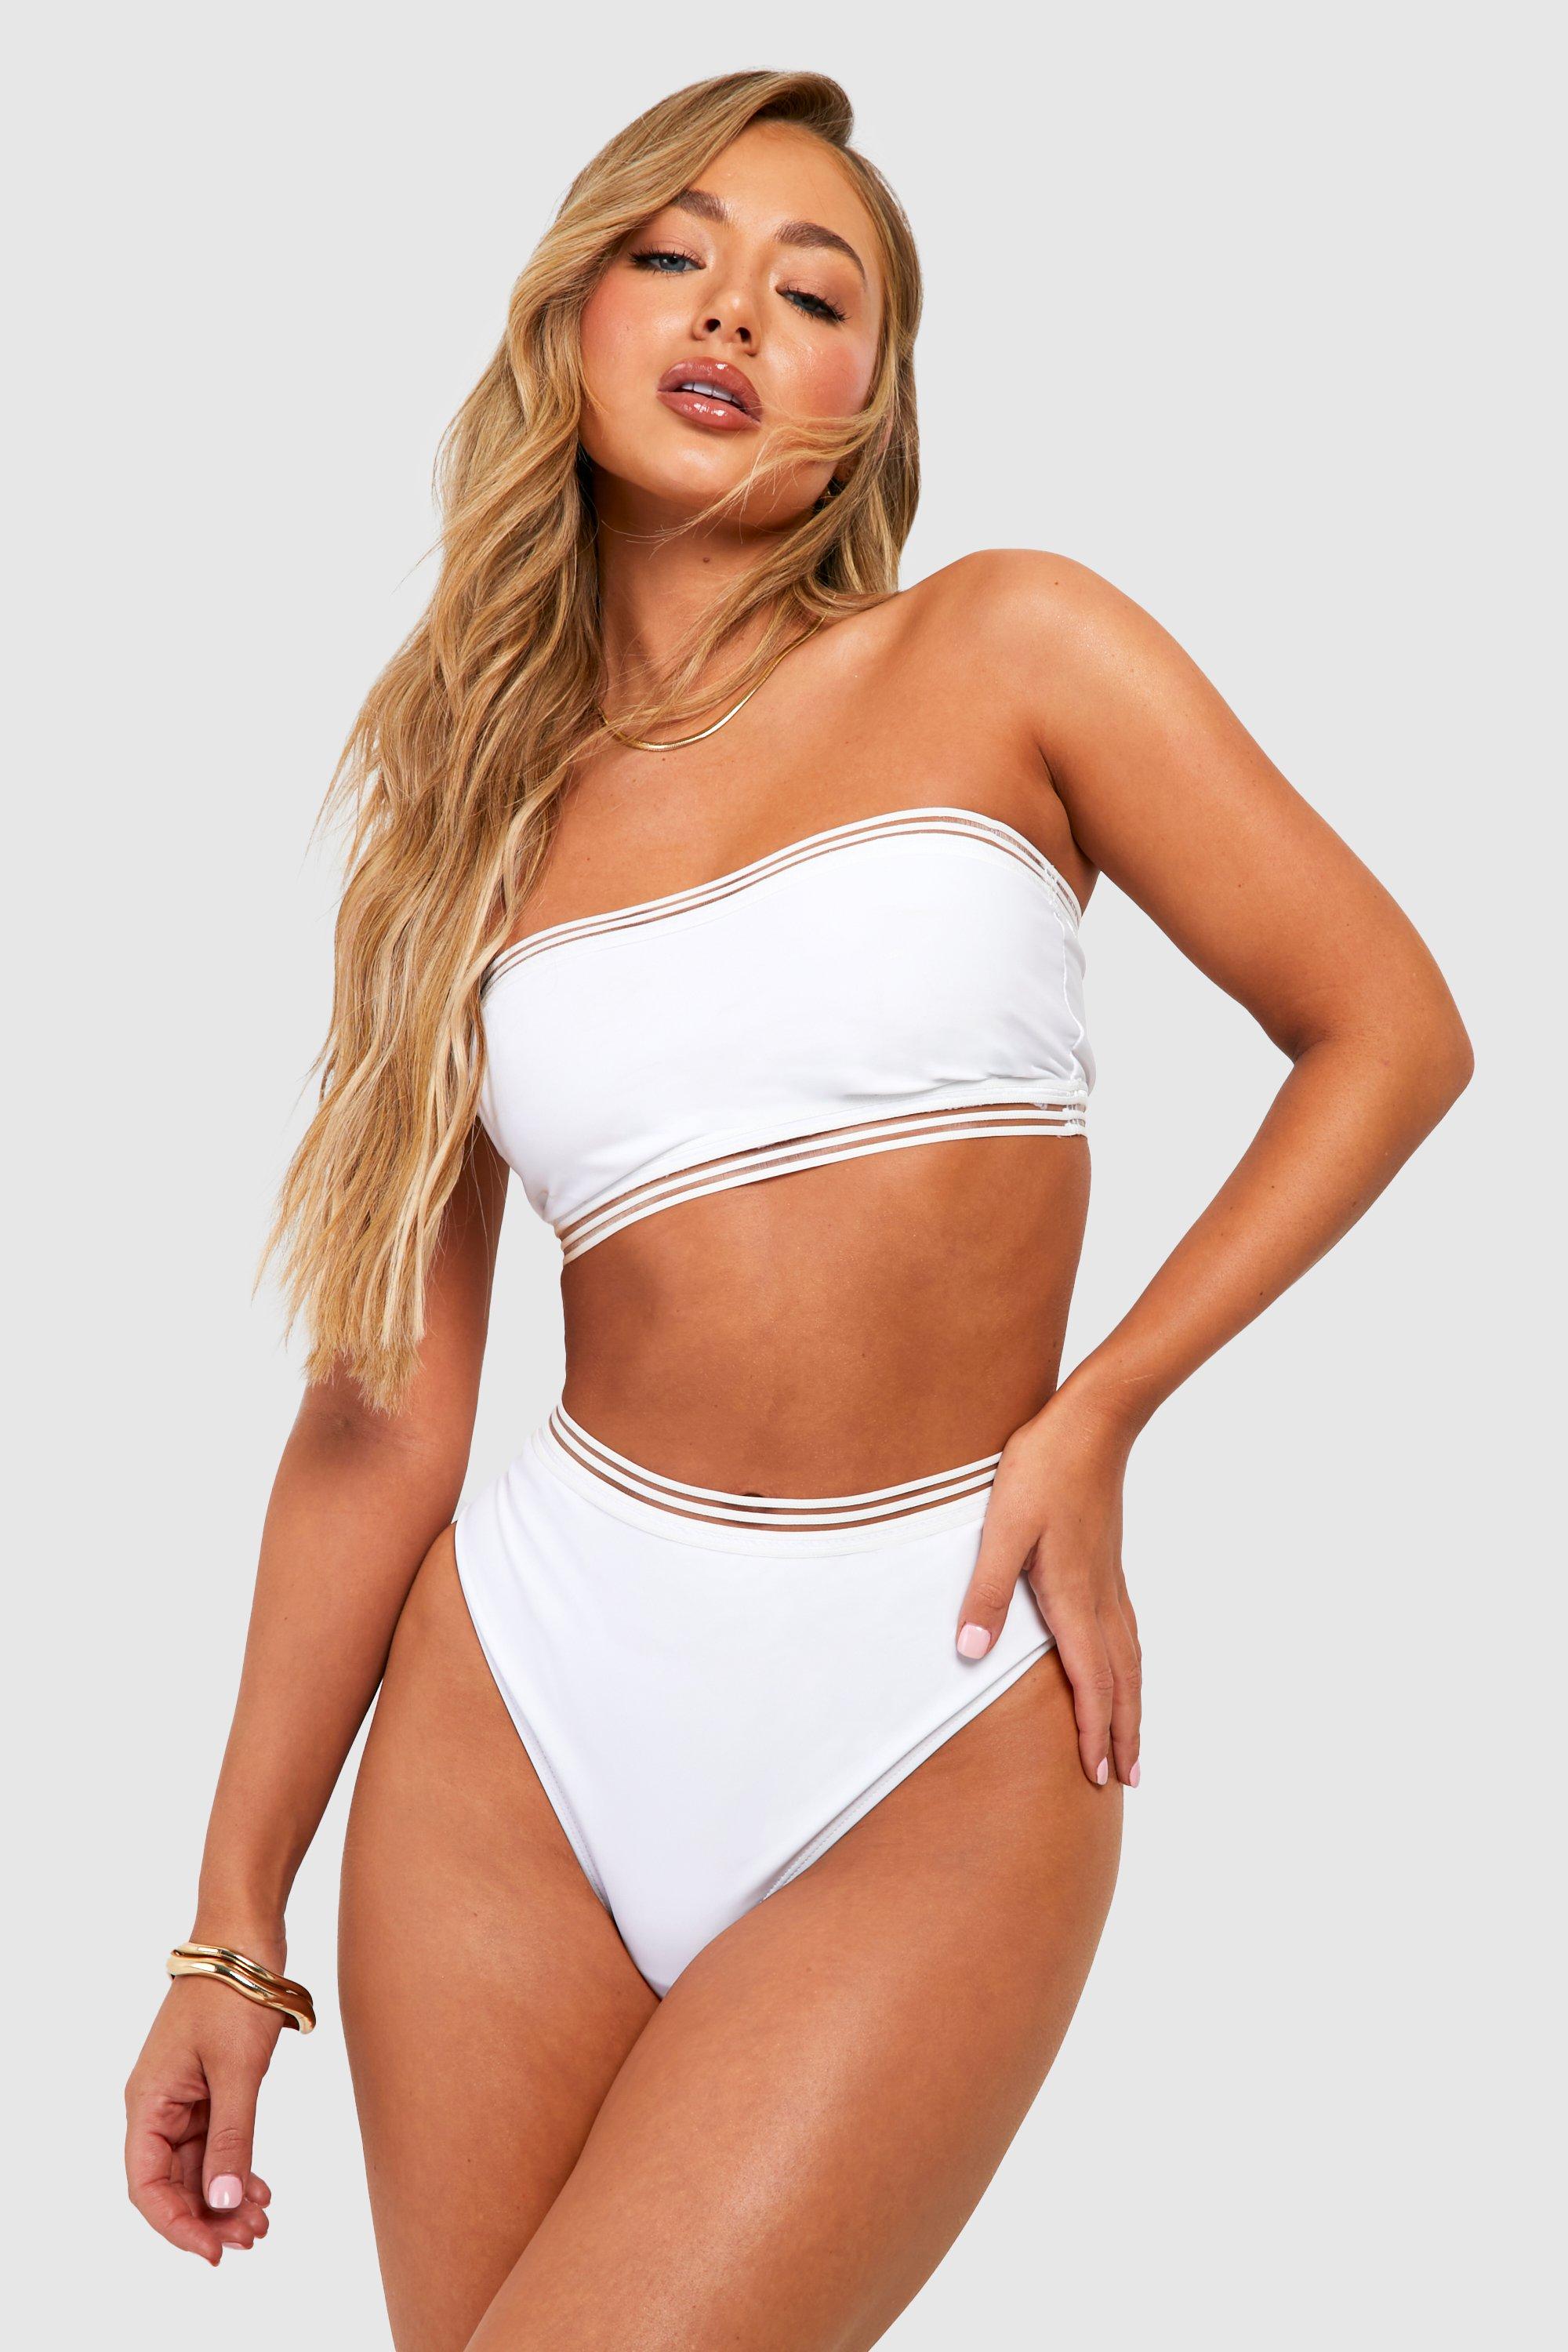 https://media.boohoo.com/i/boohoo/szz88656_white_xl/female-white-mesh-detail-bandeau-high-waisted-bikini-set